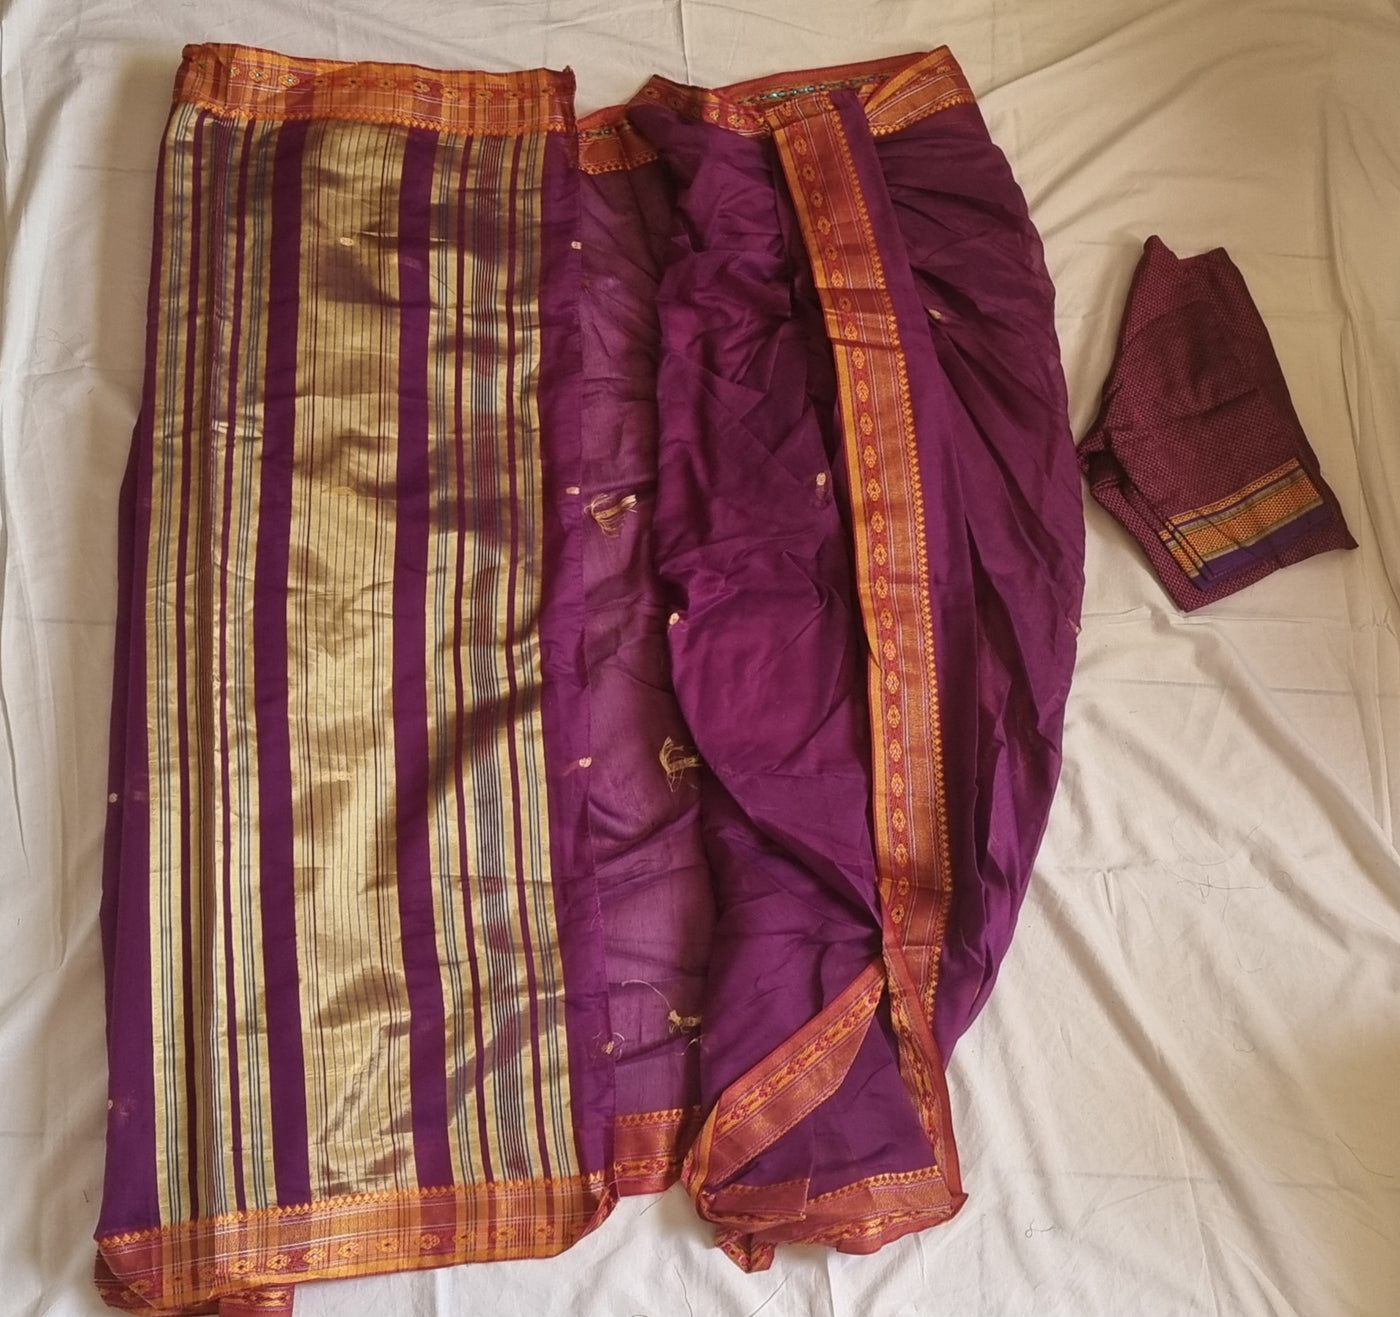 Stitched Marathi Soft Cotton Nauvari saree - Khan blouse - Upto 42 inch waist